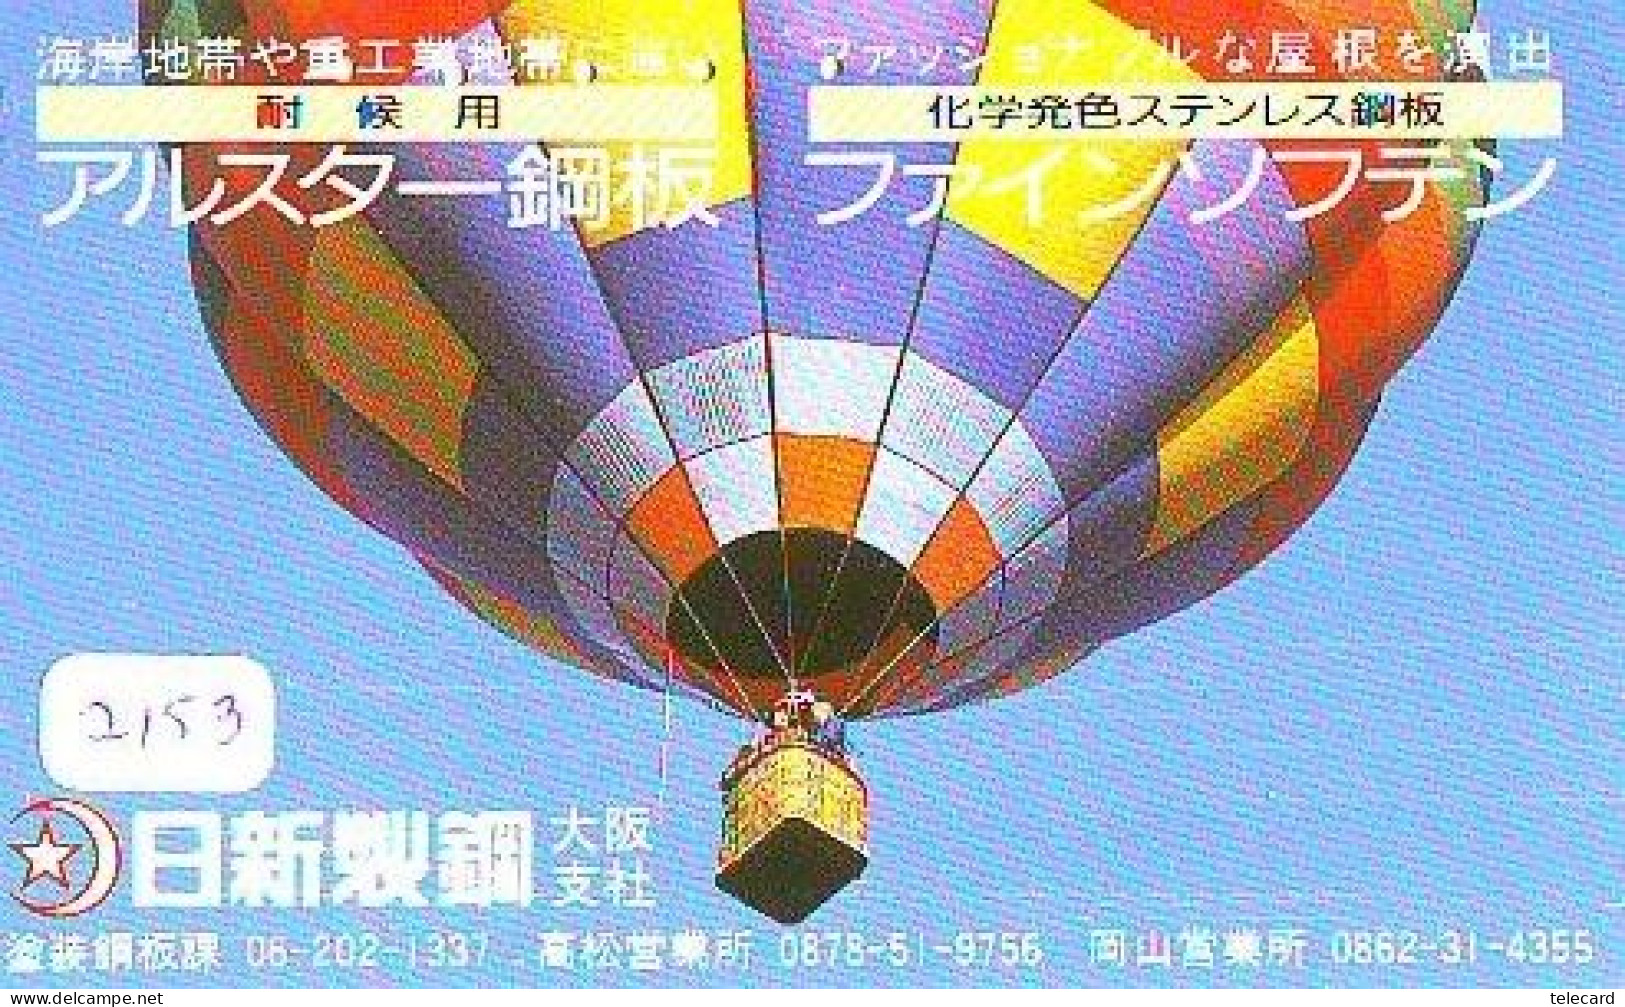 Telecarte JAPON * (2153) BALLON * MONTGOLFIERE - Hot Air Balloon * Aerostato * Heißluft PHONECARD JAPAN - - Sport